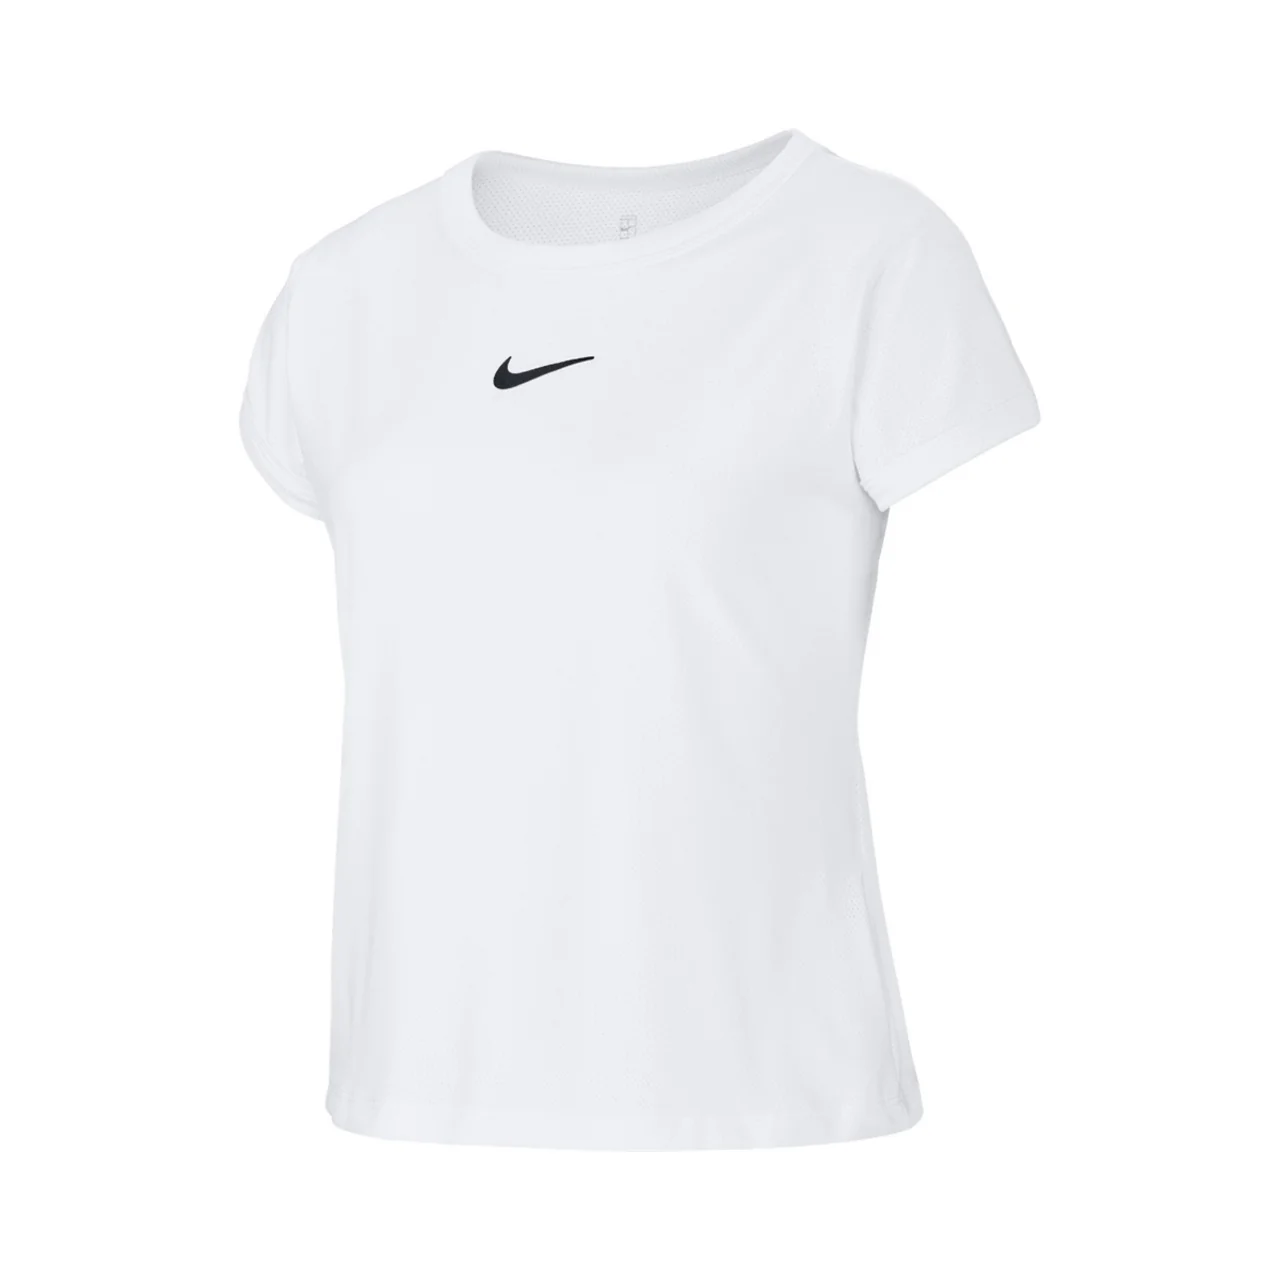 Nike Dri-Fit Tee Girls White